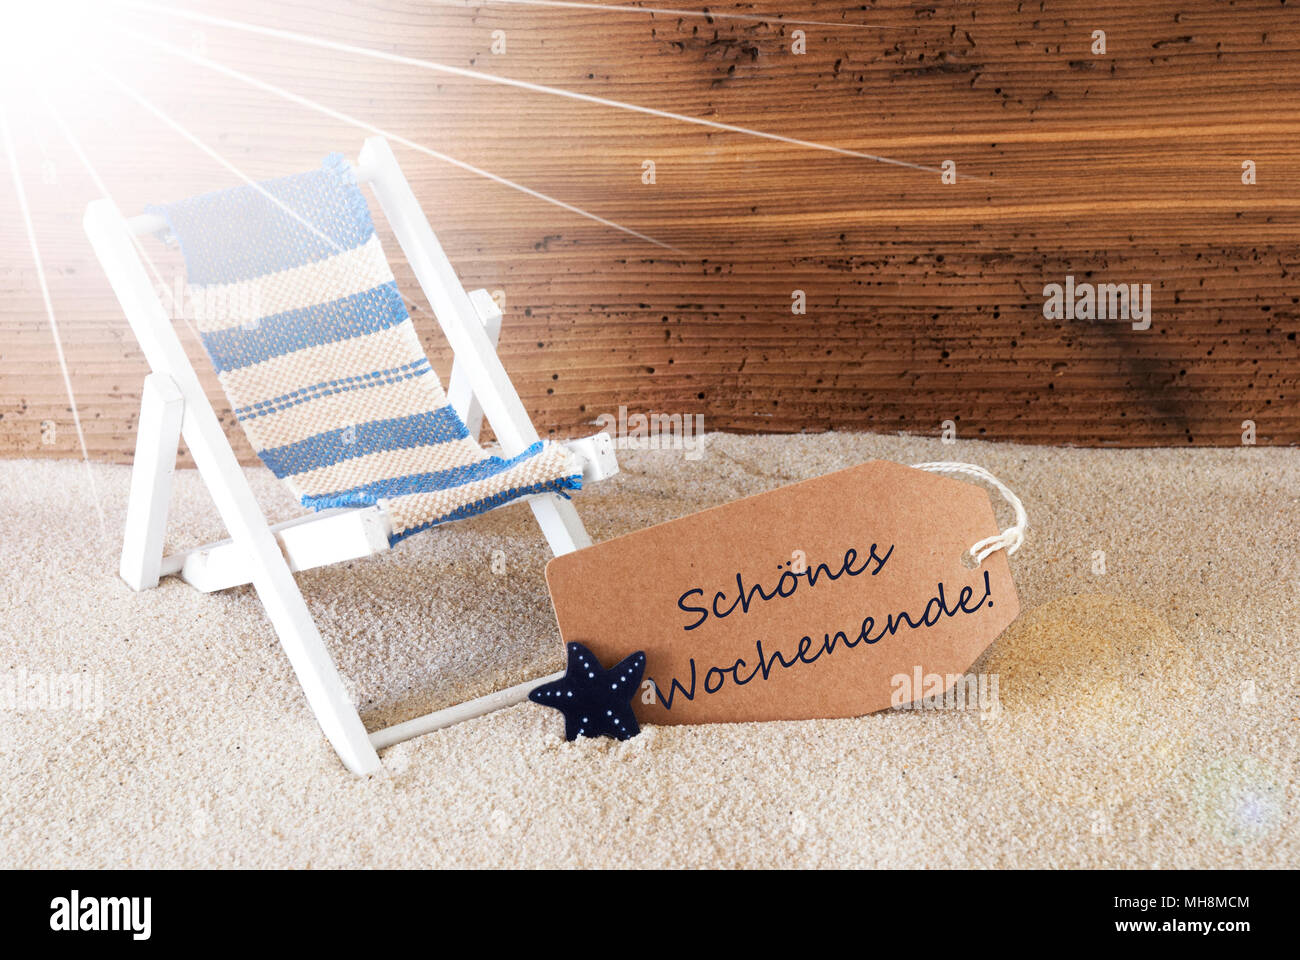 Summer Sunny Label, Schoenes Wochenende Means Happy Weekend Stock Photo